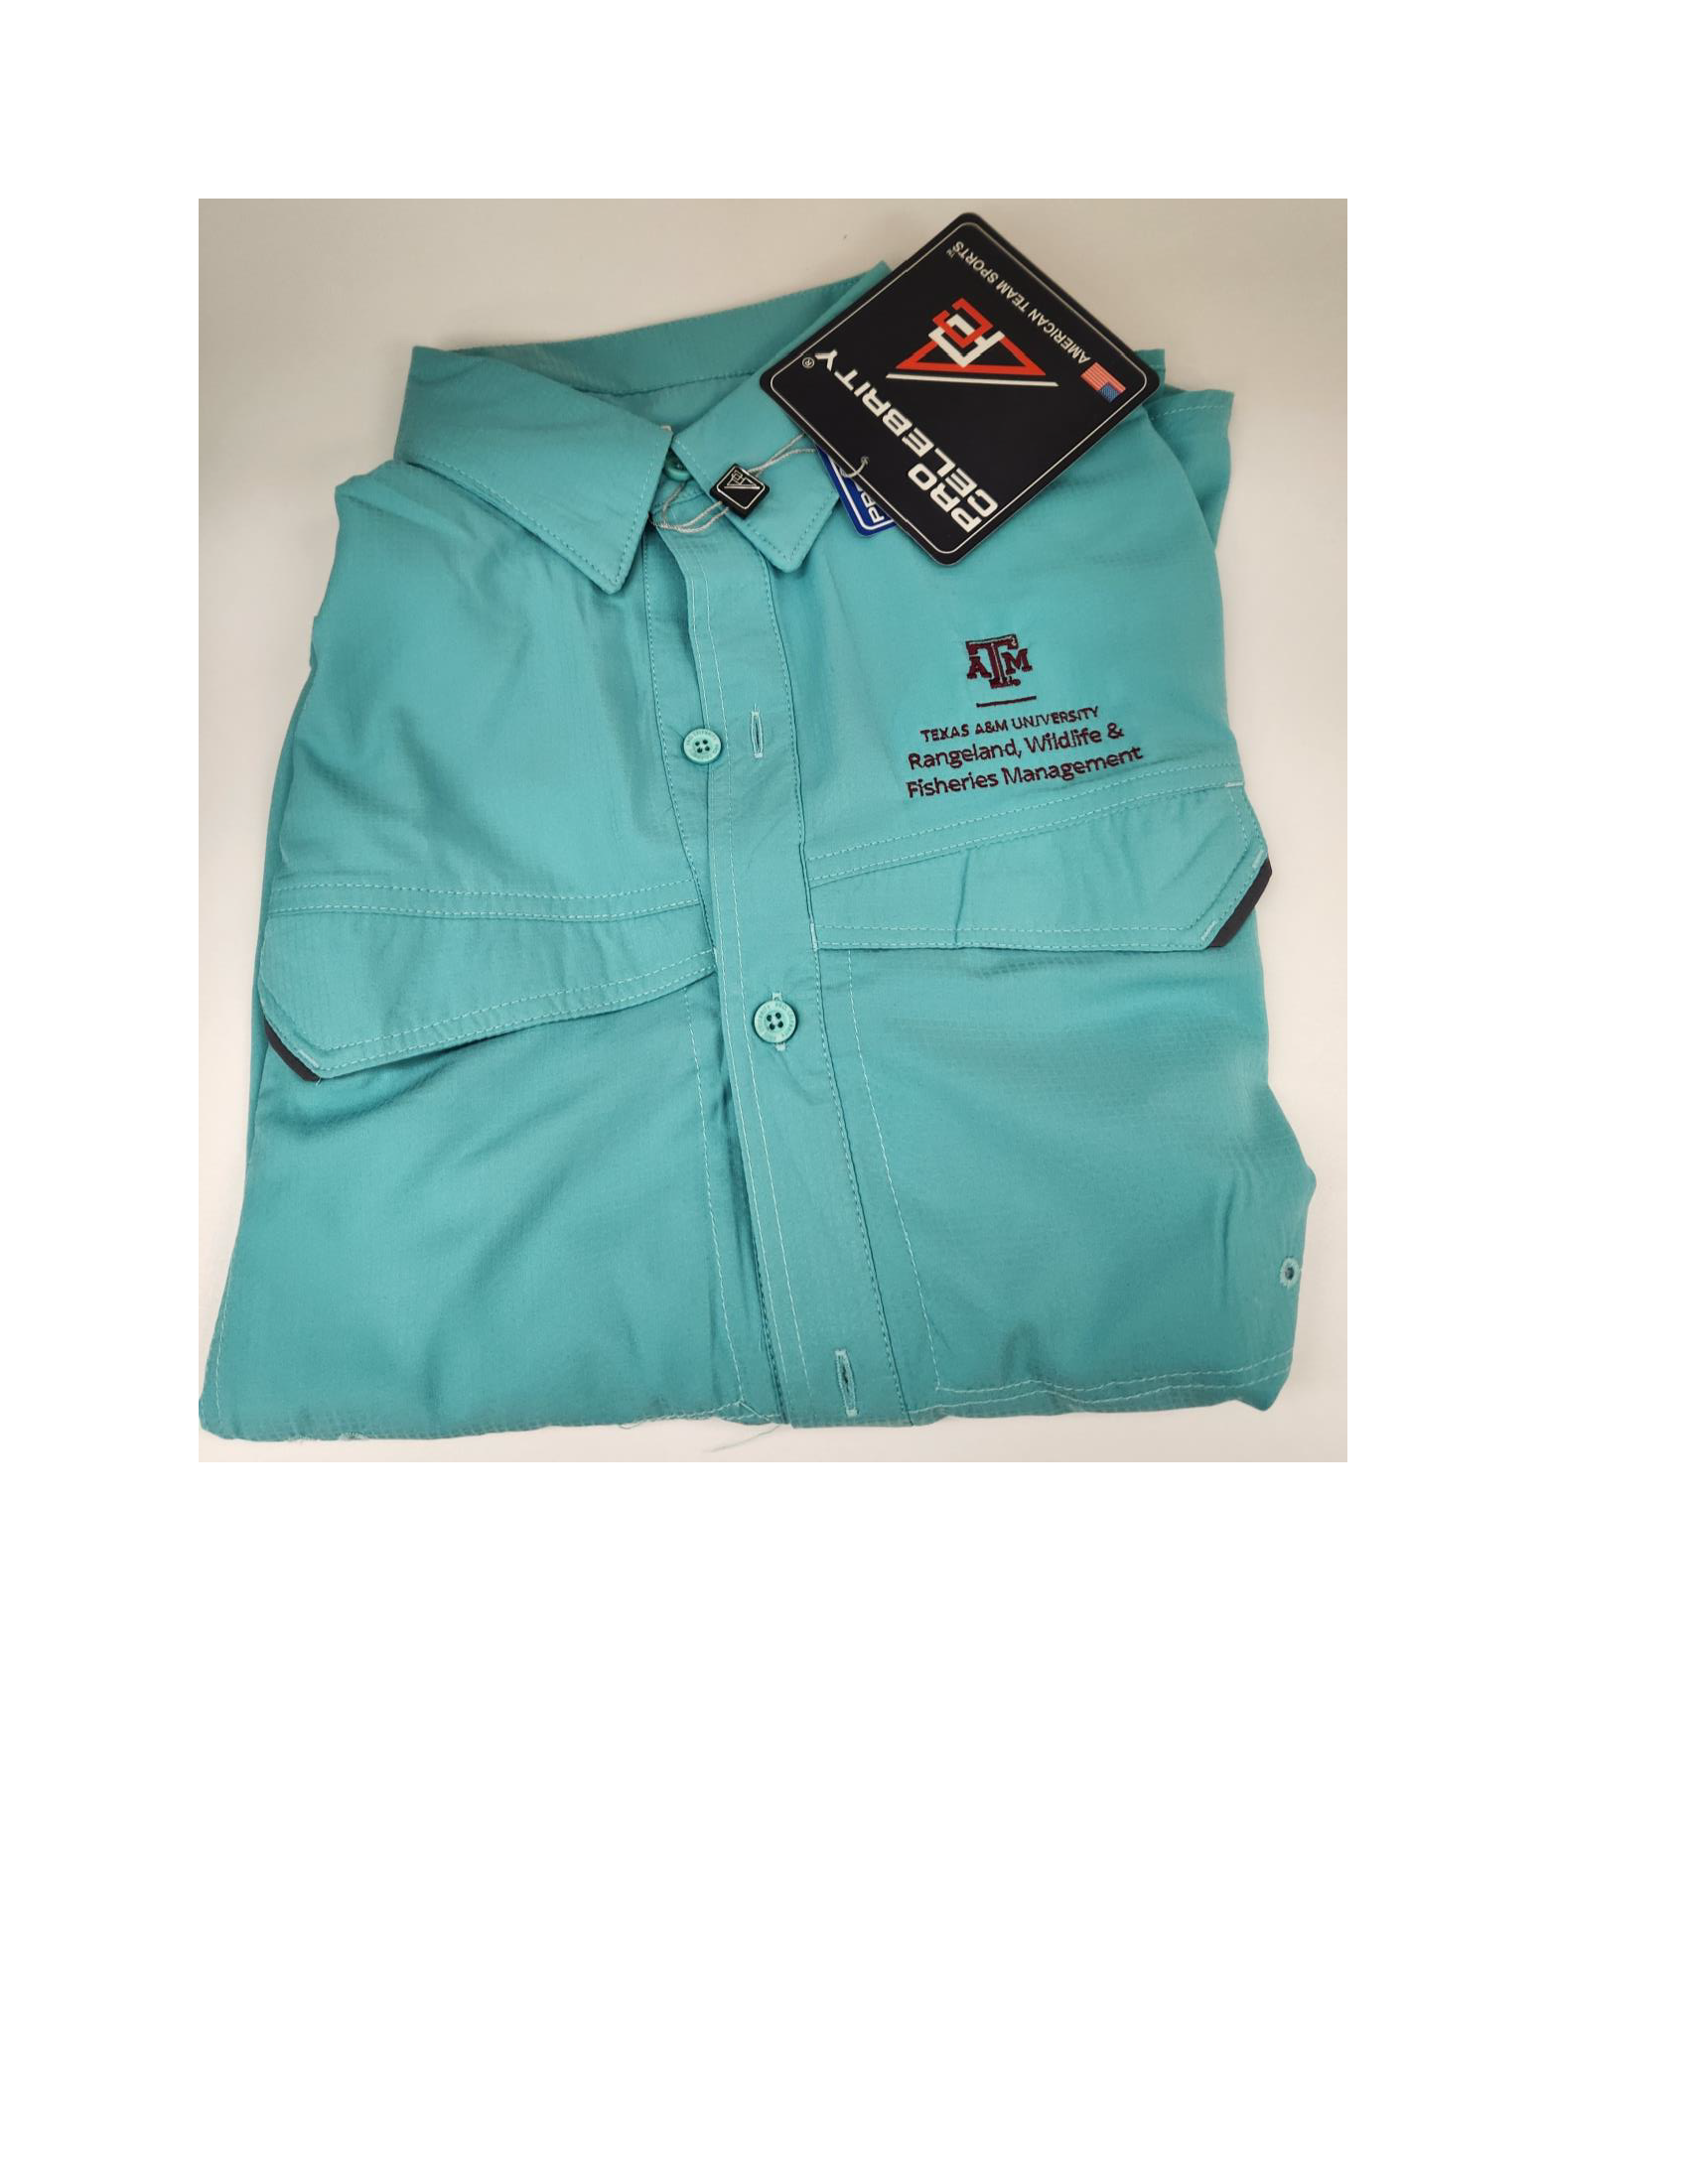 RWFM Fishing Shirt - Products - Texas A&M University eStore